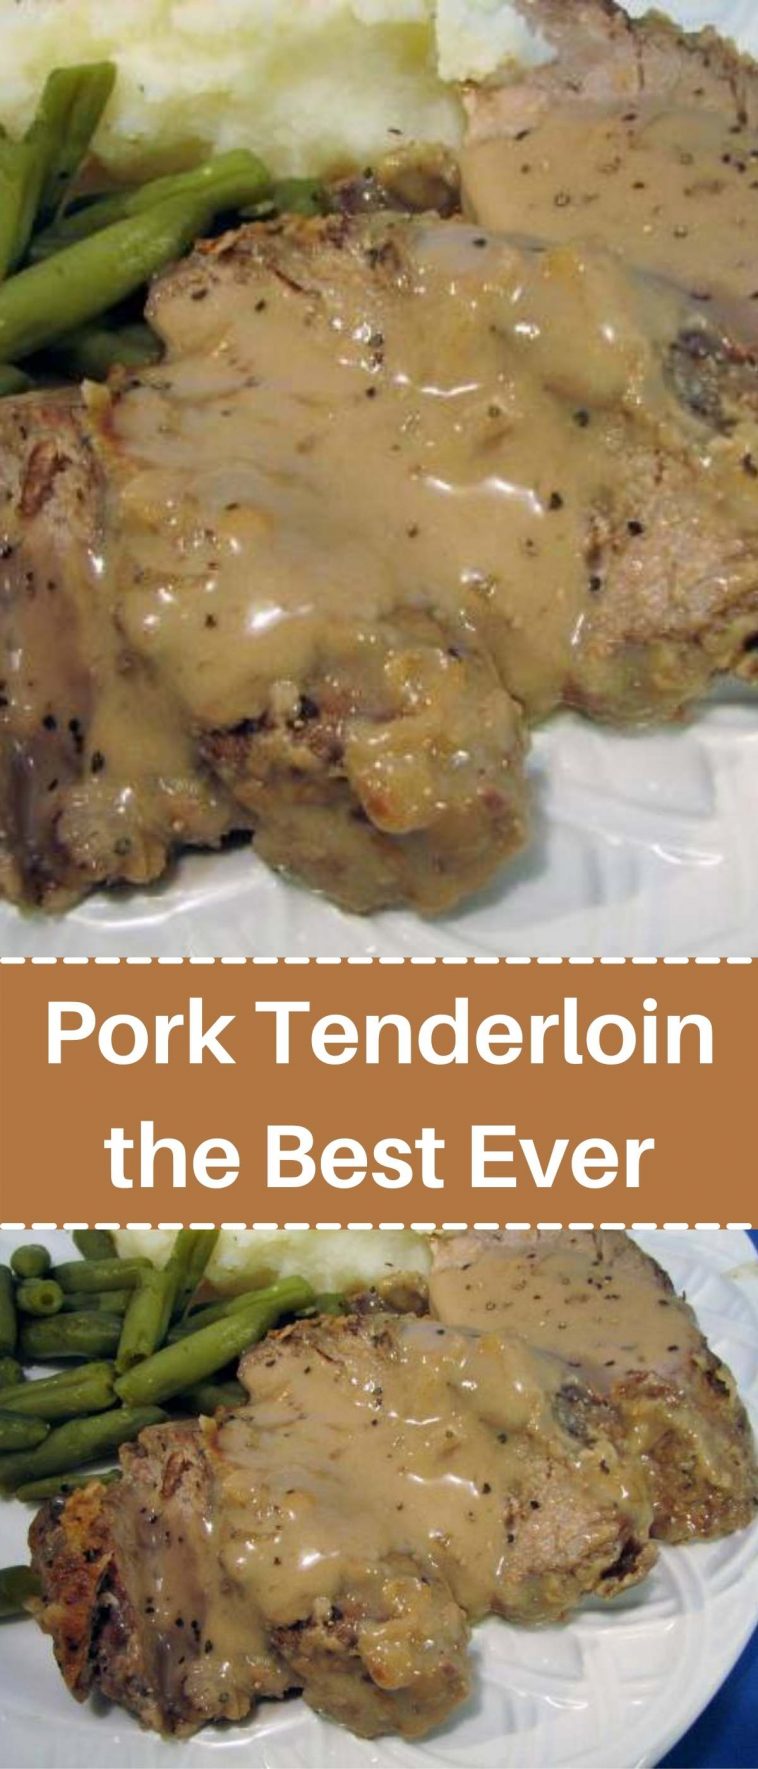 Pork Tenderloin the Best Ever